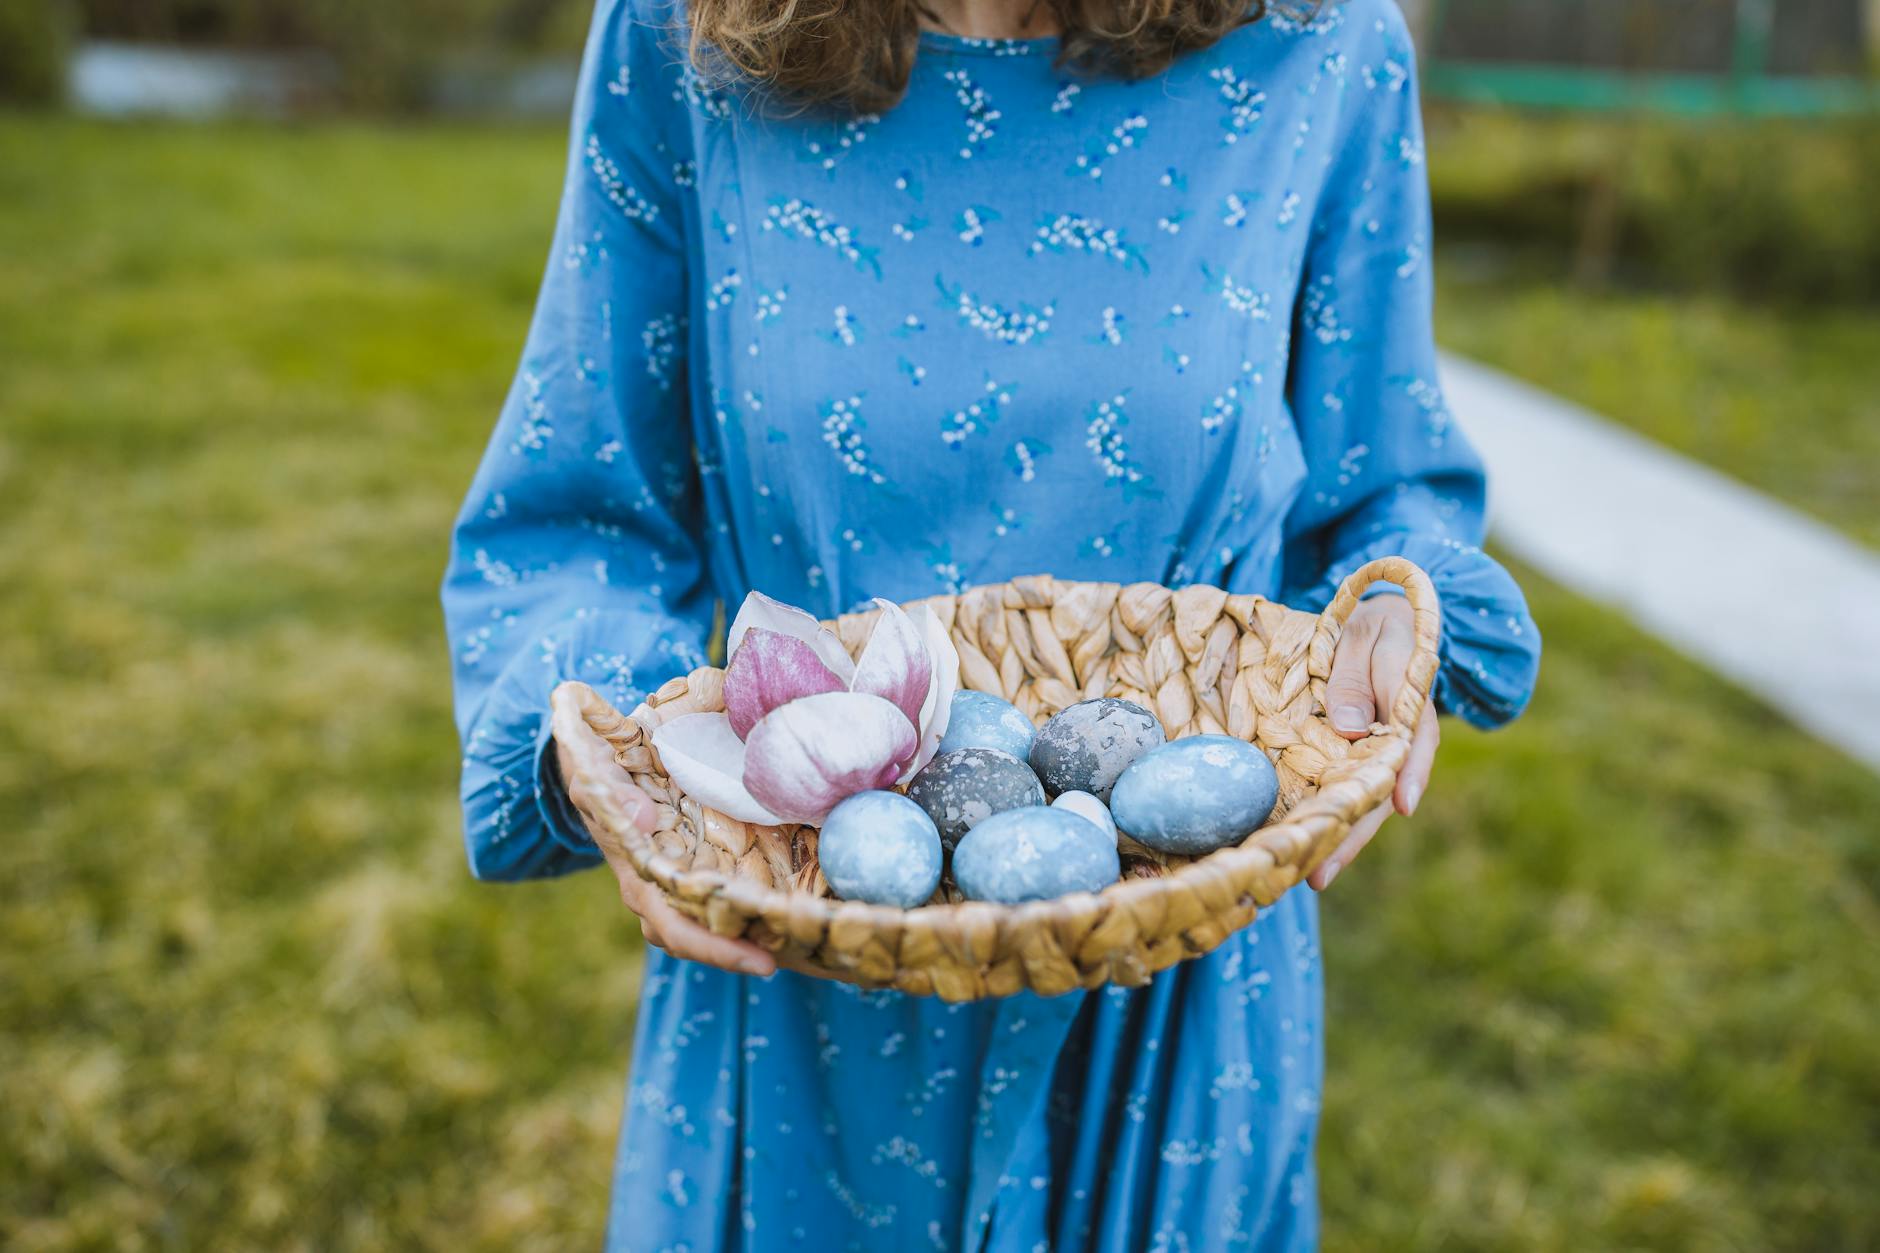 Woman in Blue Long Sleeve Dress Holding a Basket